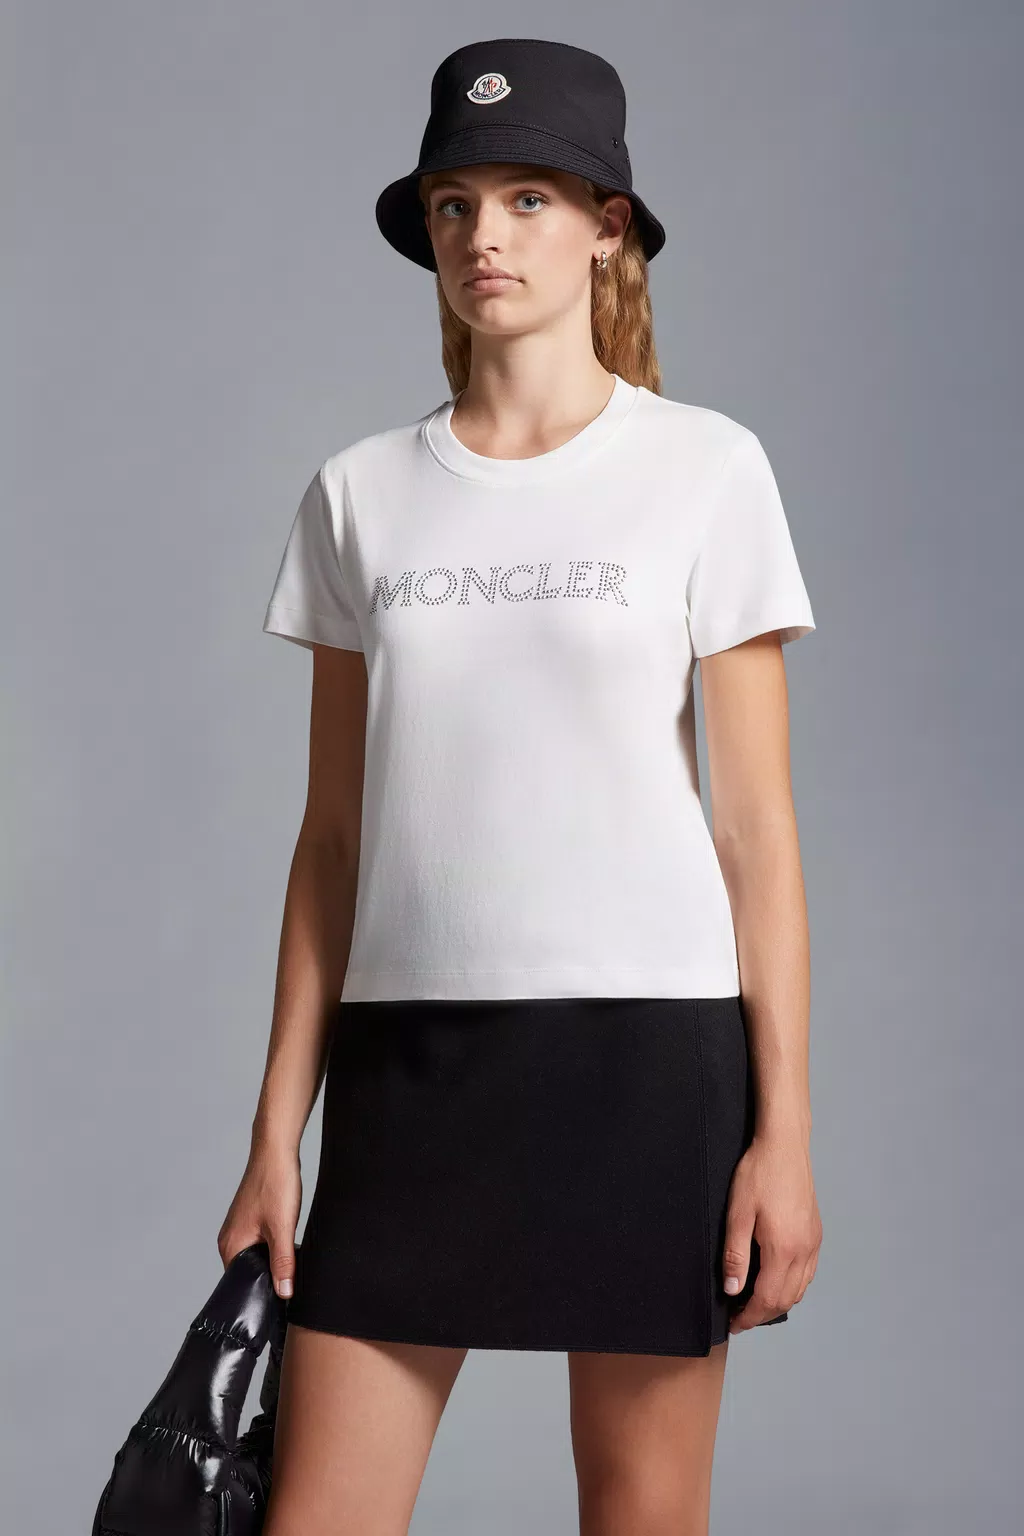 Moncler Women's Logo T-Shirt